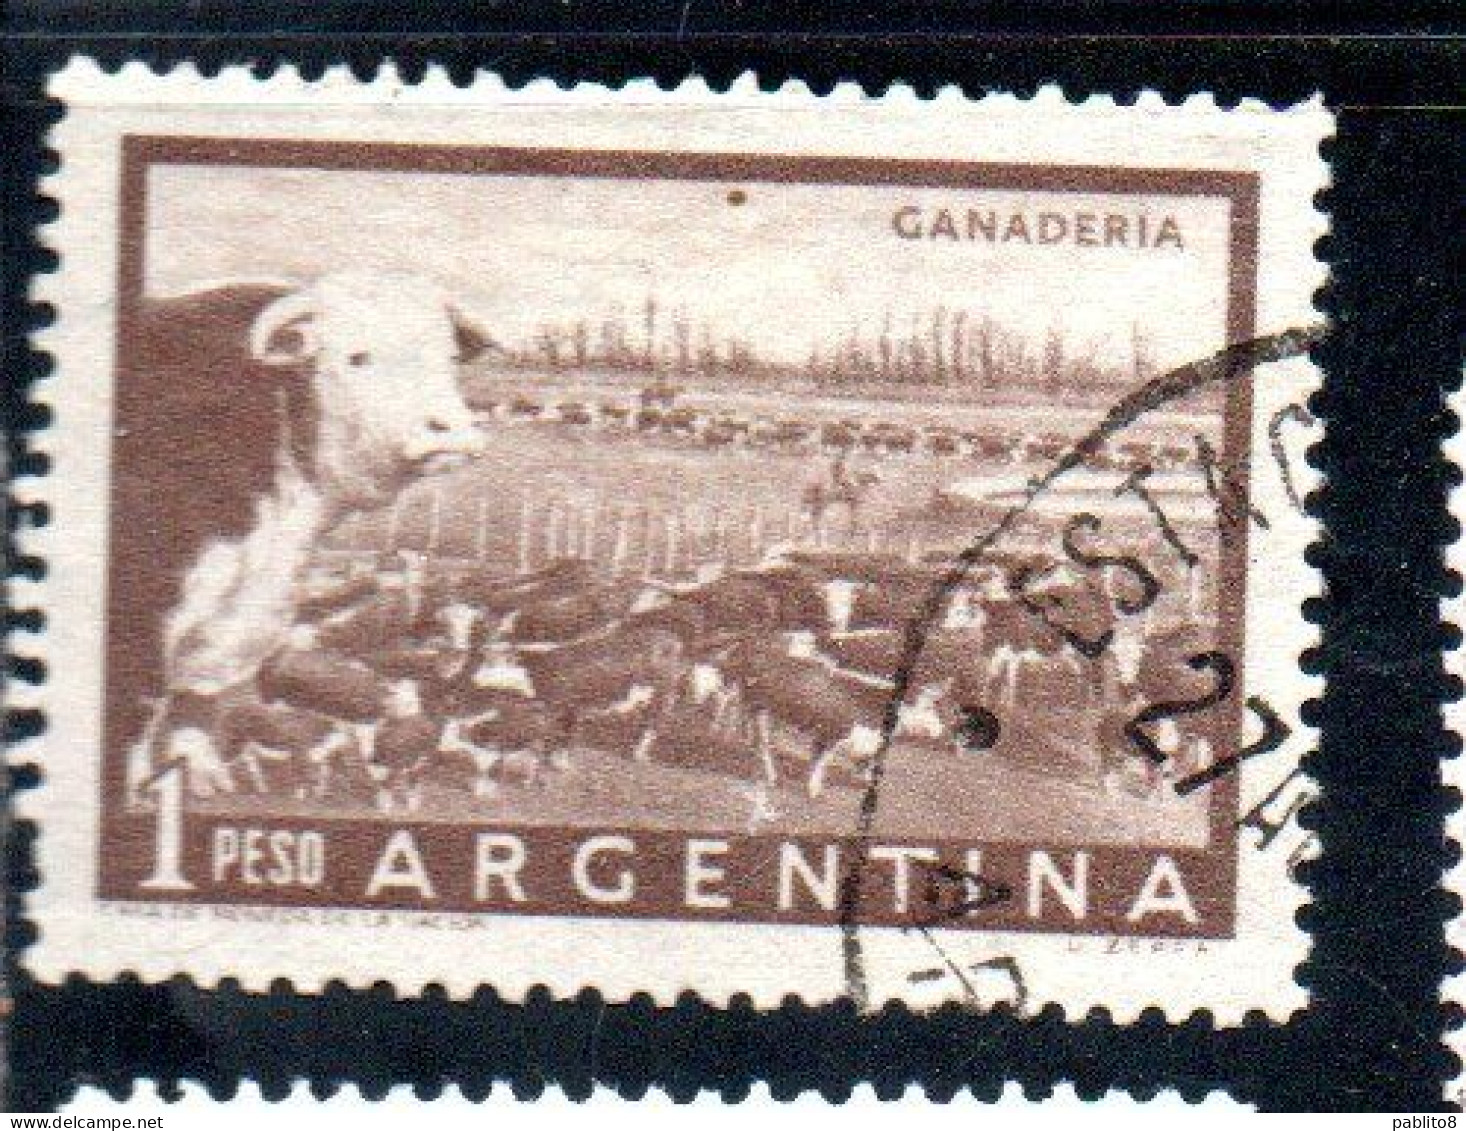 ARGENTINA 1954 1959 1958 CATTLE RANCH GANADERIA 1p USED USADO OBLITERE' - Usati